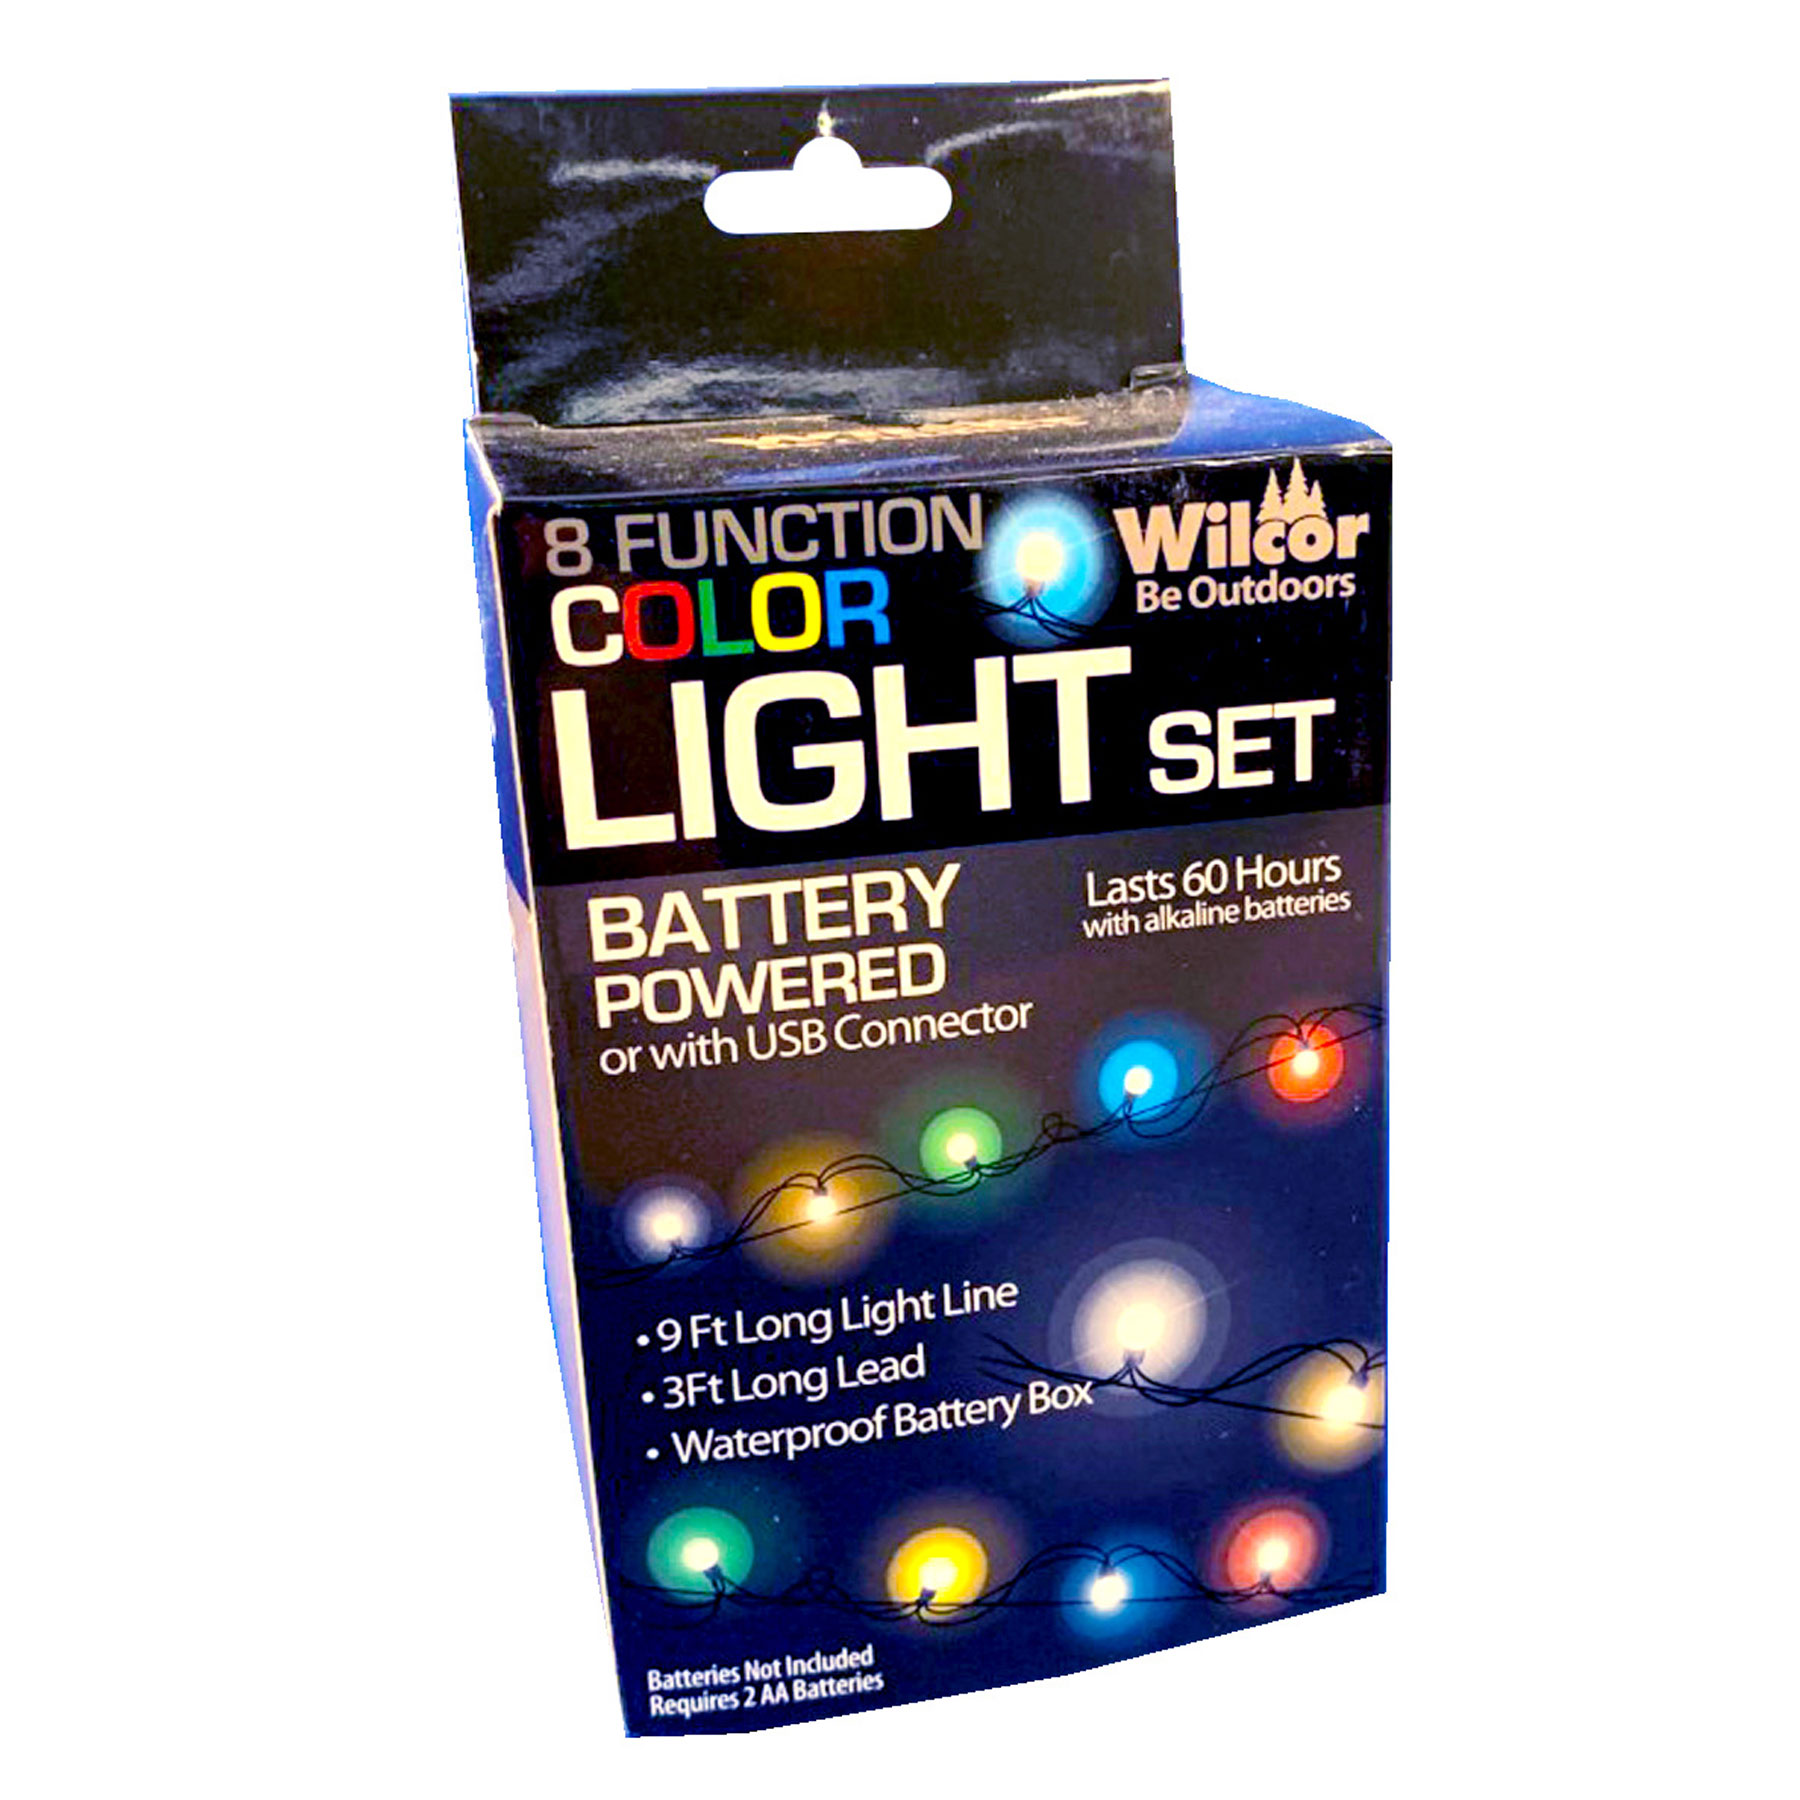 https://www.wilcor.net/productimages/cmp0751_battery_powered_light_set_color_box.jpg